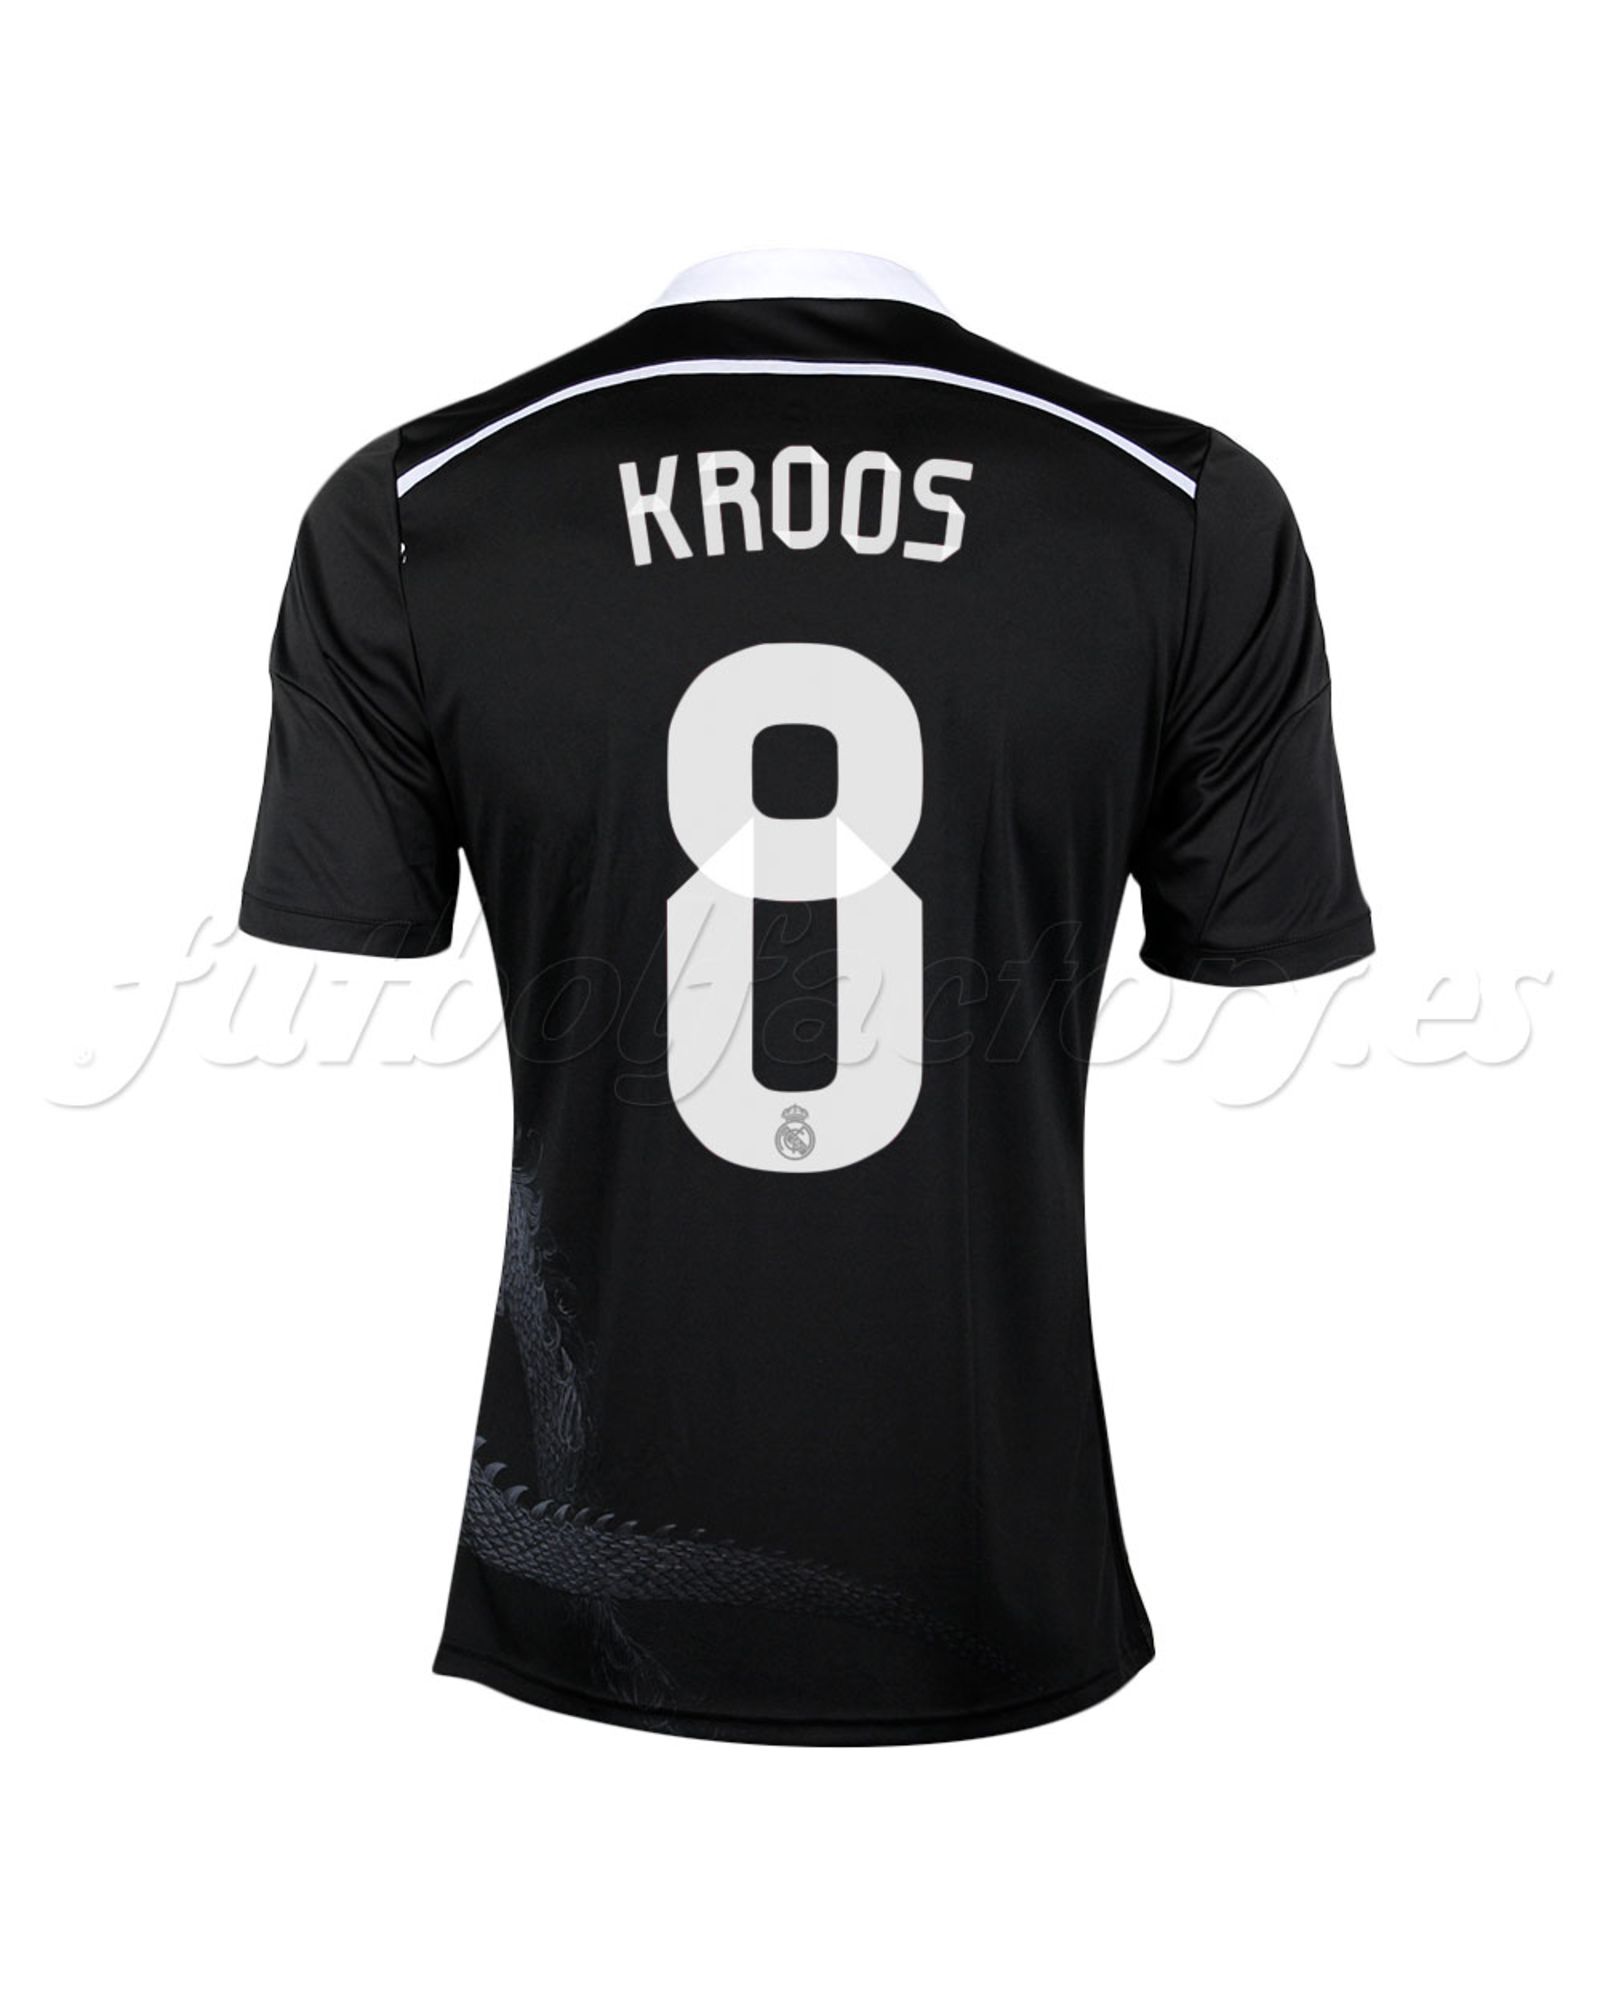 Camiseta Real Madrid 3ª  Kroos 2014/2015  Negro - Fútbol Factory